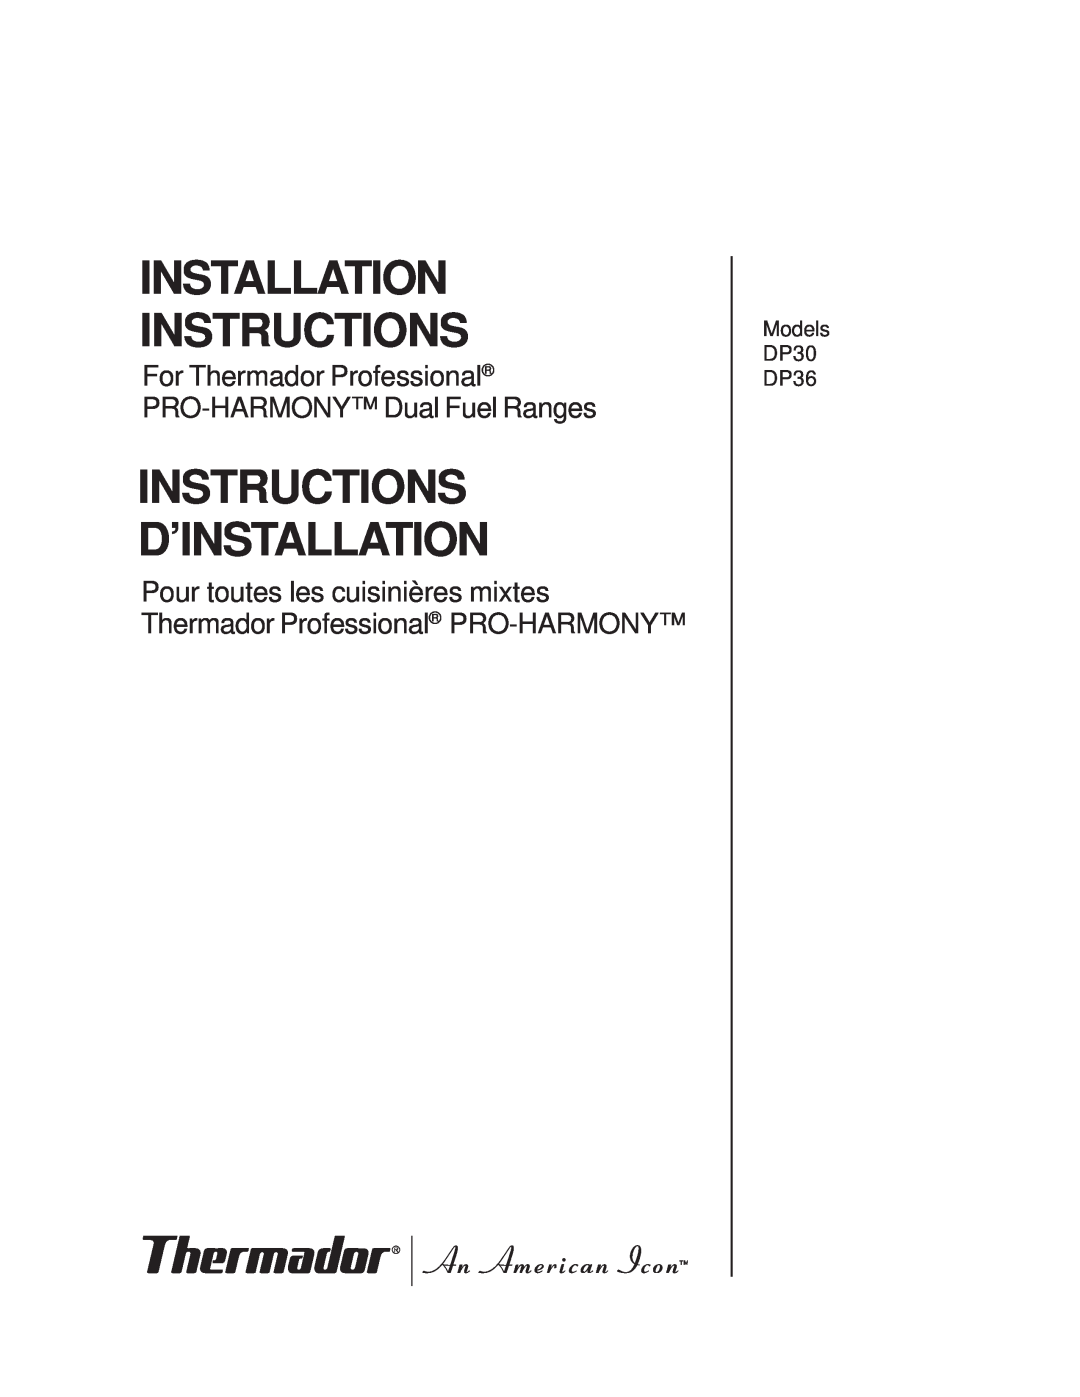 Thermador PRO-HARMONY installation instructions Installation Instructions, Instructions D’Installation, Models DP30 DP36 